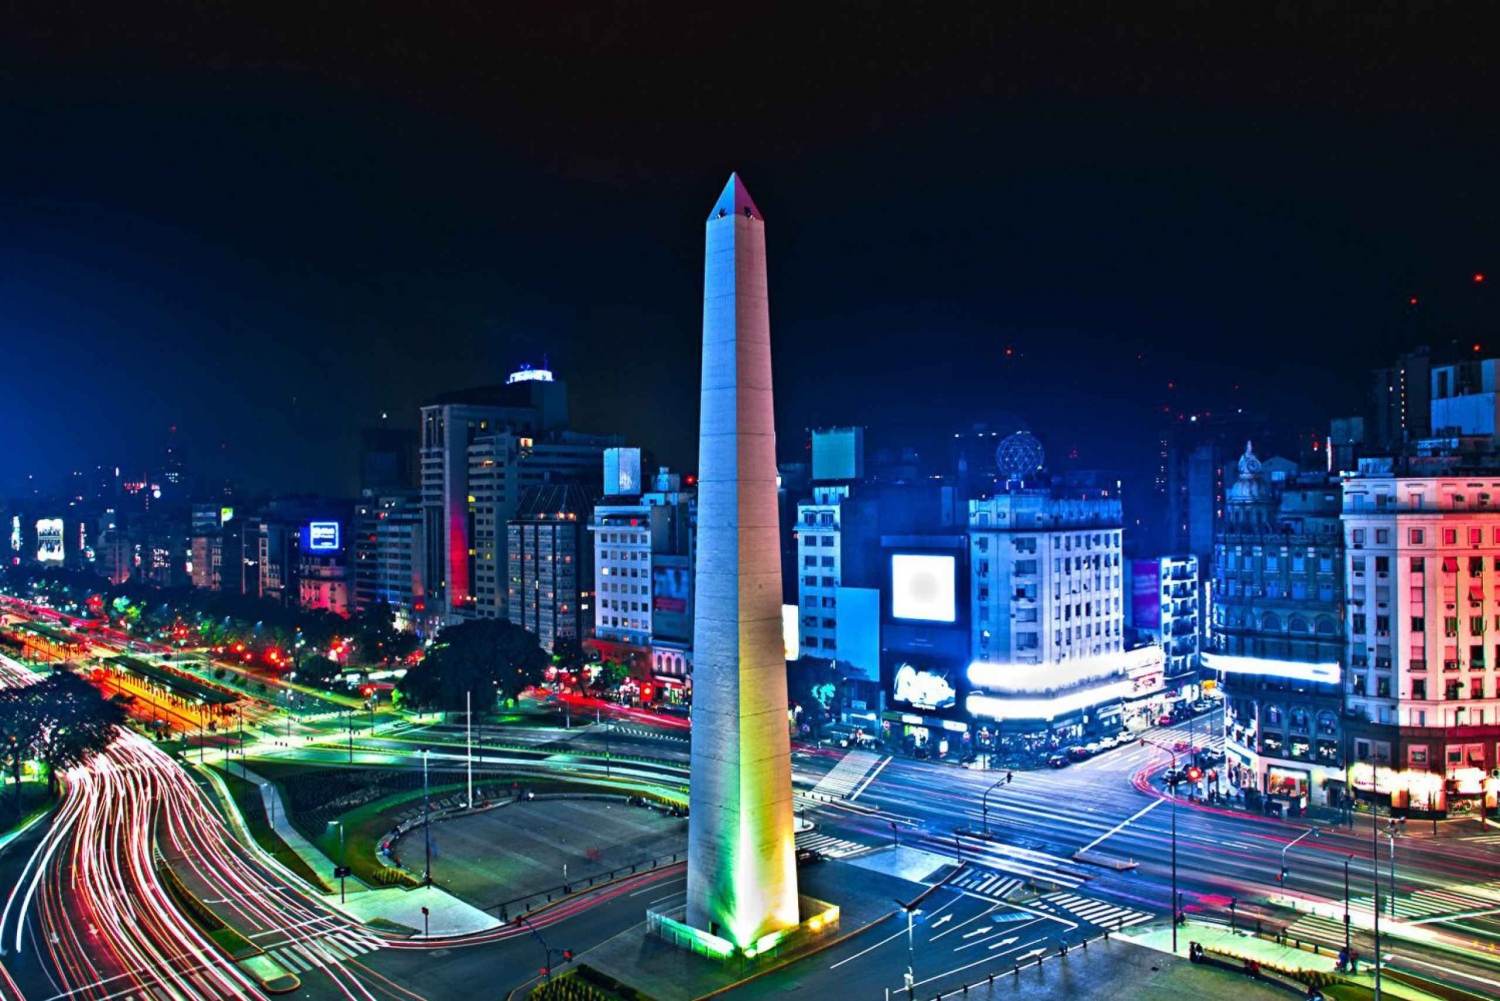 Buenos Aires by Night: Lille gruppe byrundtur i byen med nat